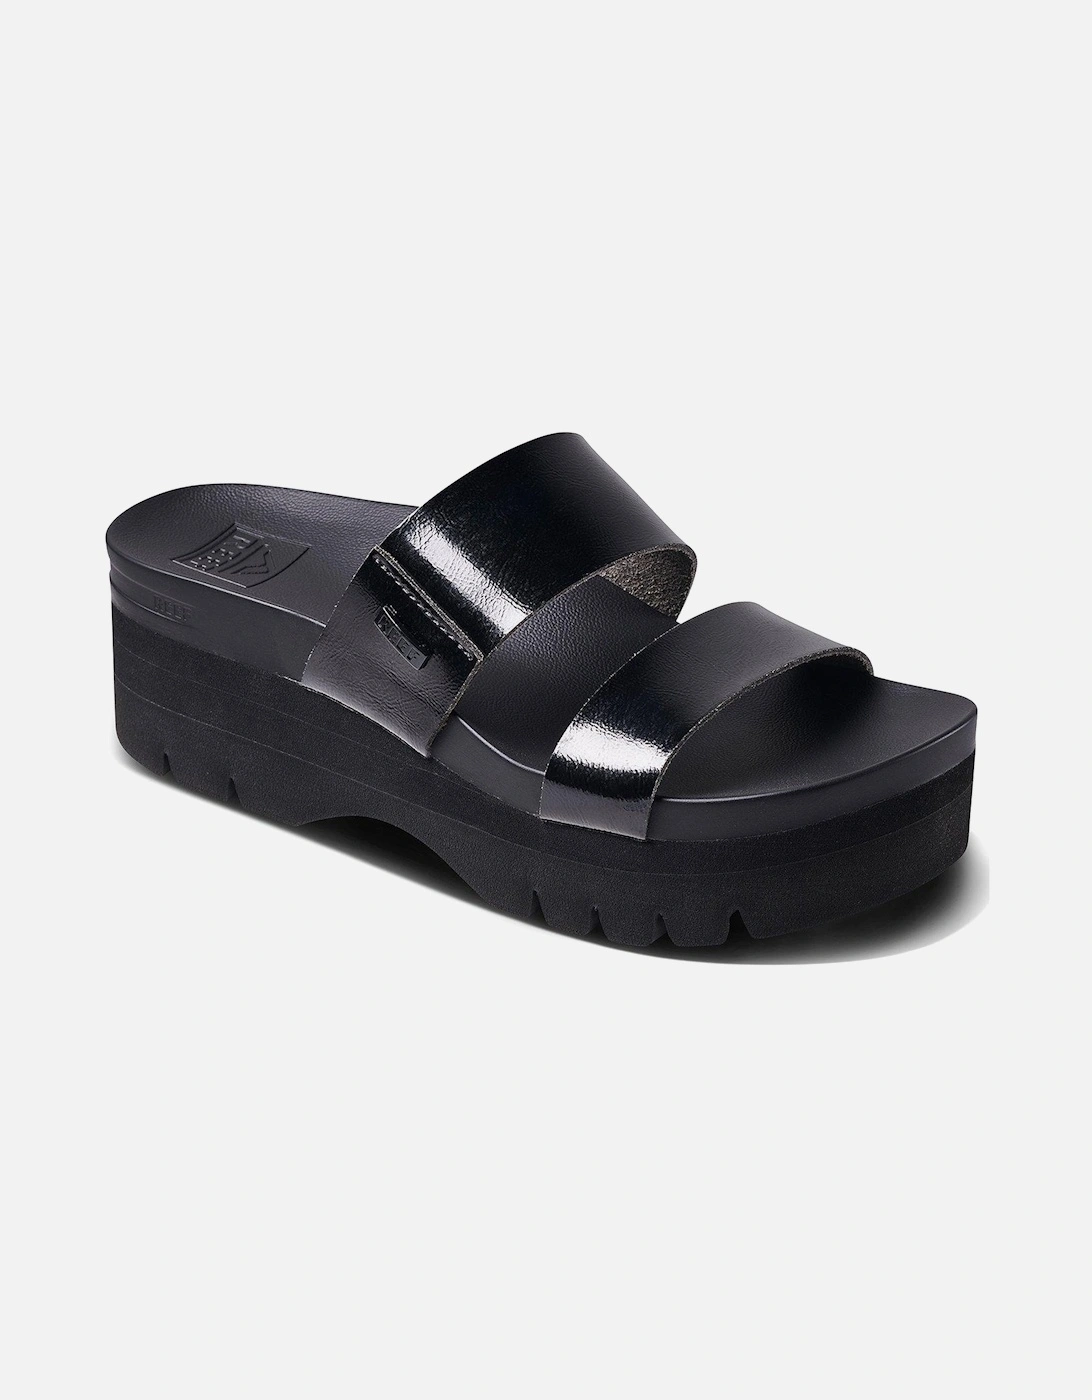 Cushion Vista Higher Wedged Sandals - Black, 6 of 5